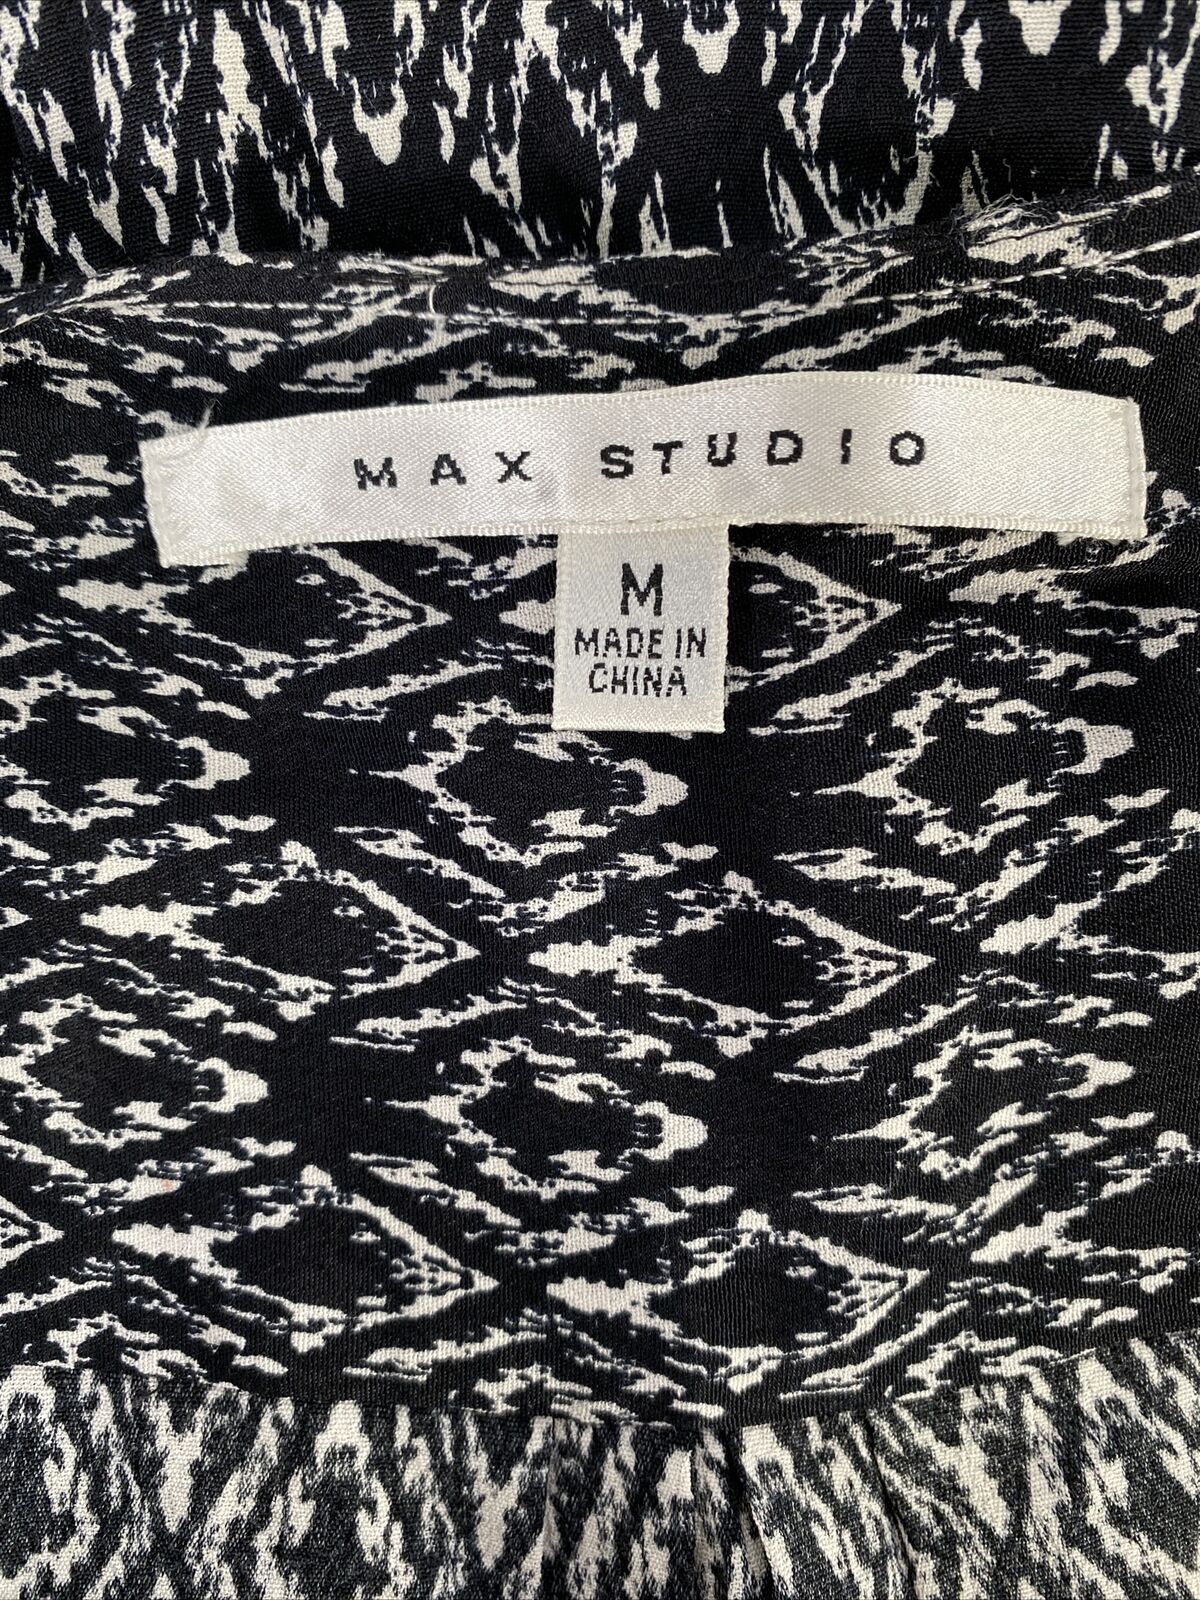 Max Studio Women's Black Sleeveless Faux Wrap Blouse Top - M